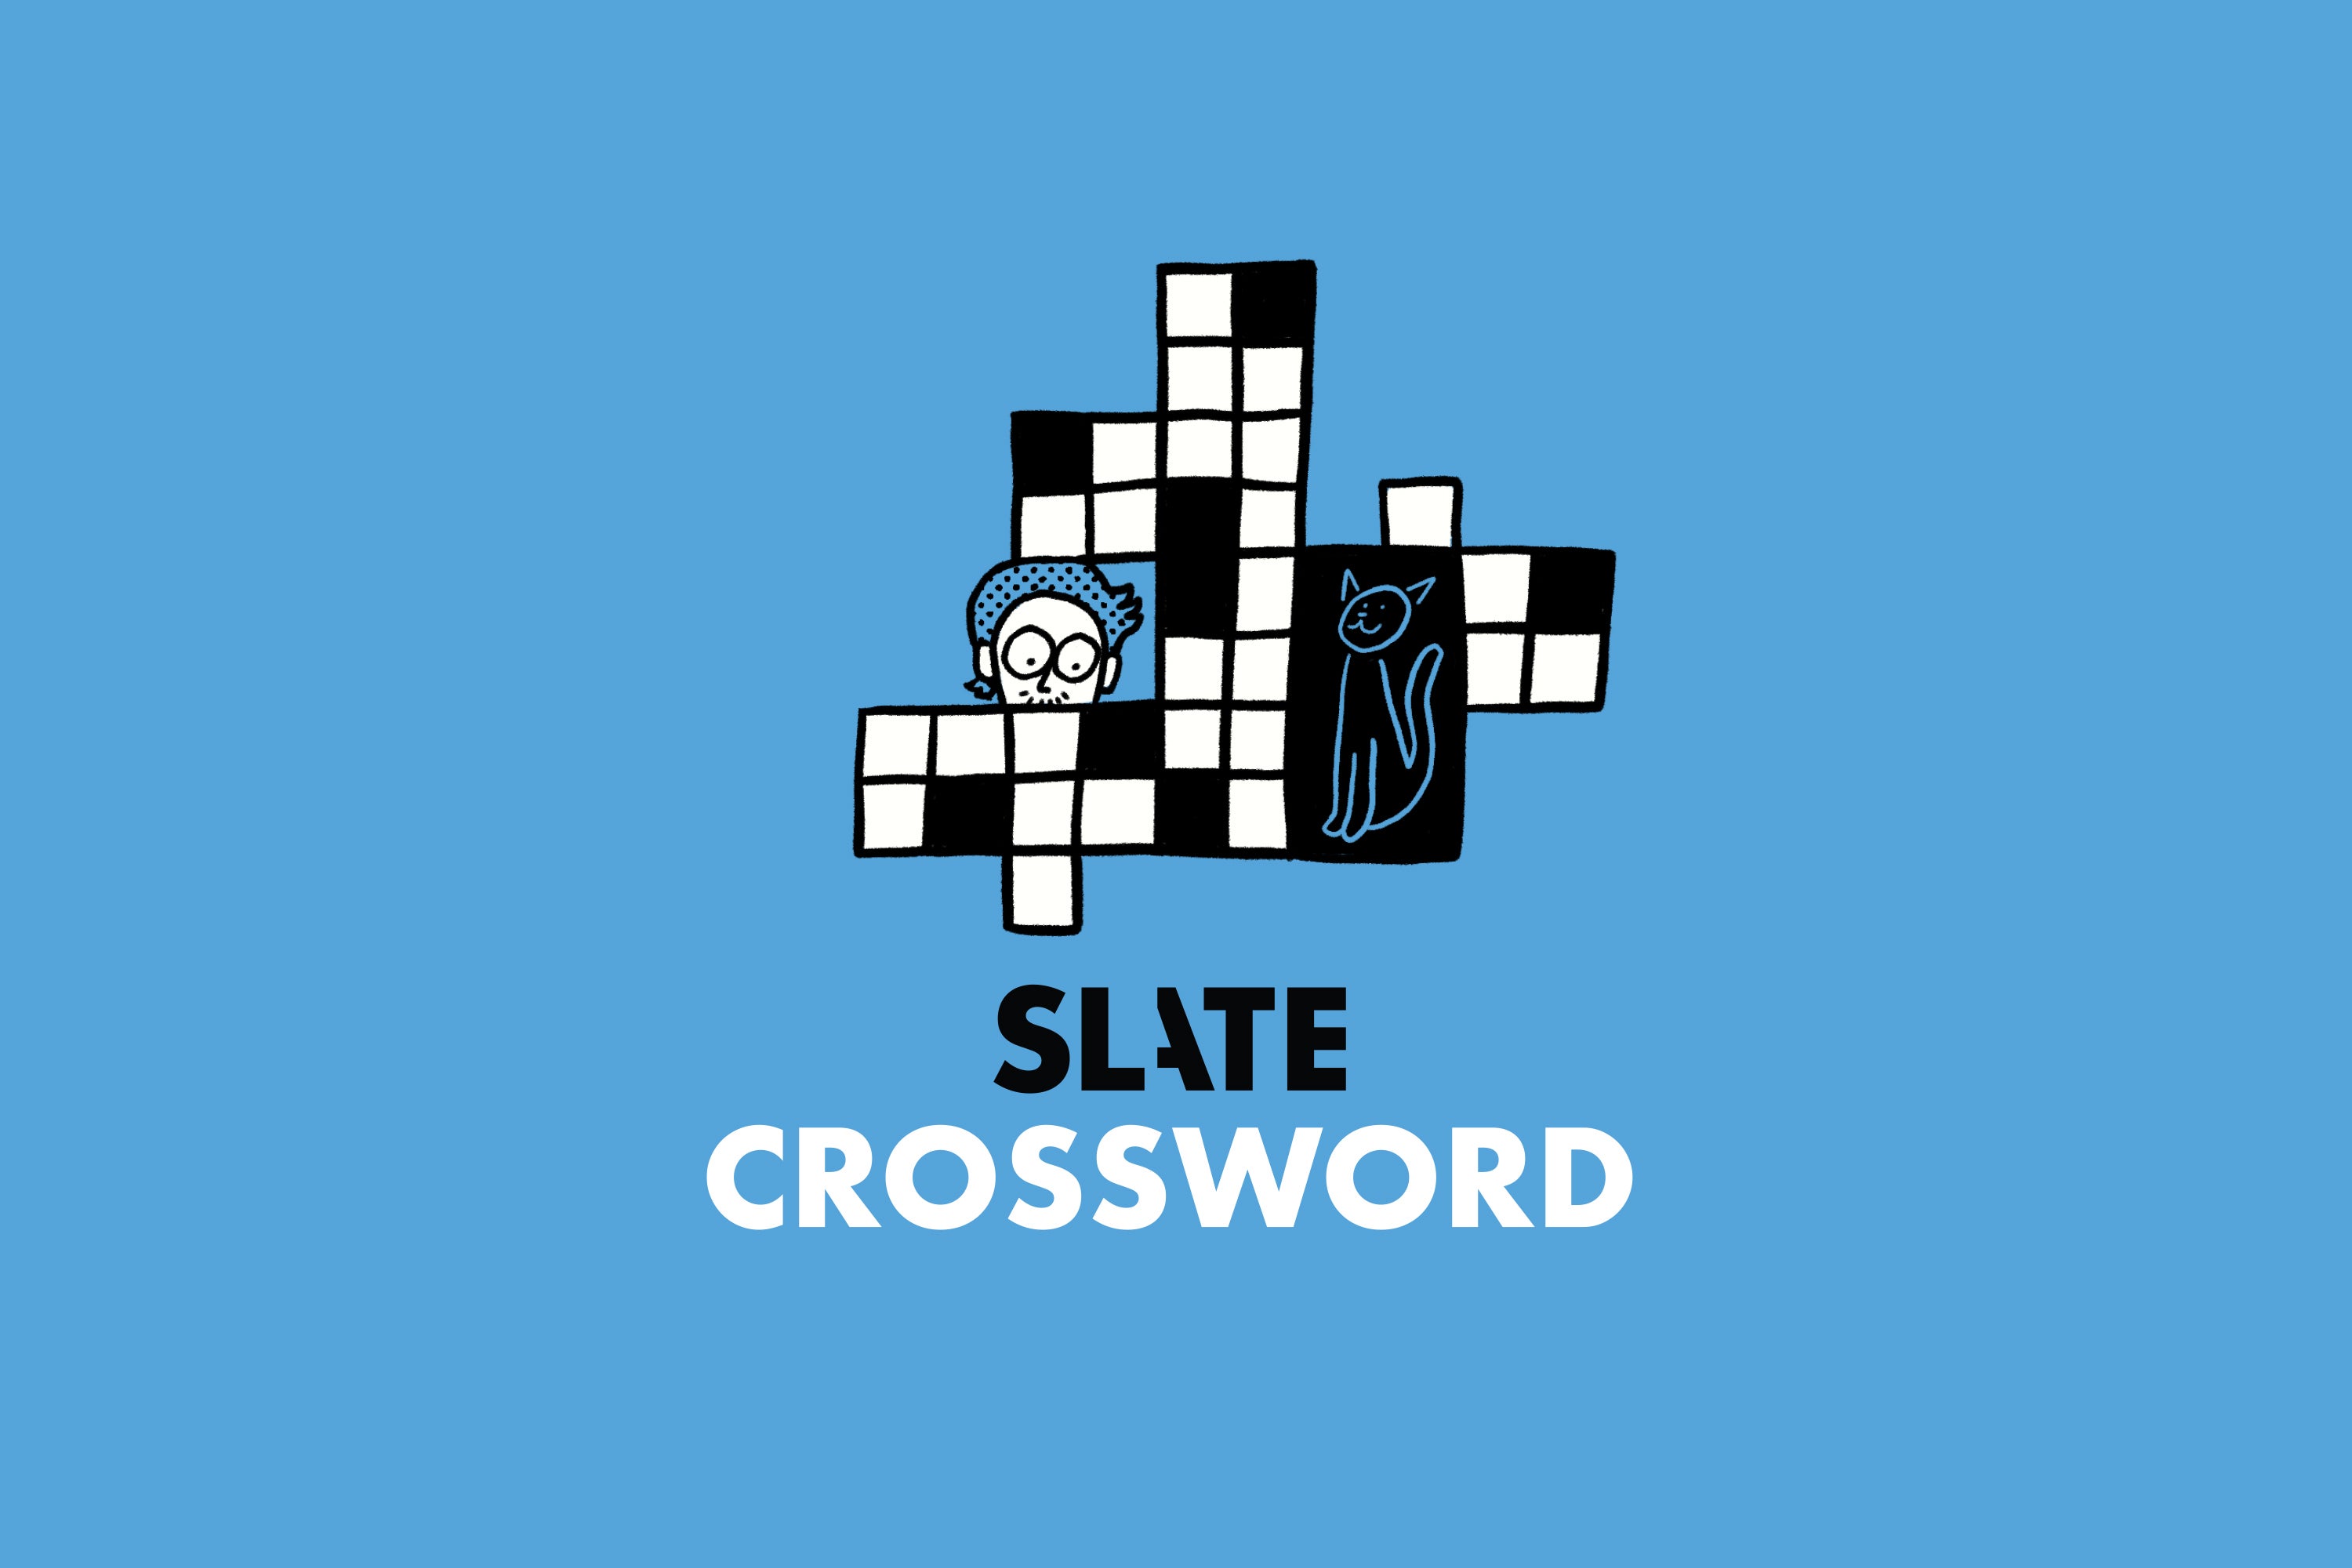 Slate Crossword: “Renaissance” Woman, to Fans (Three Letters)